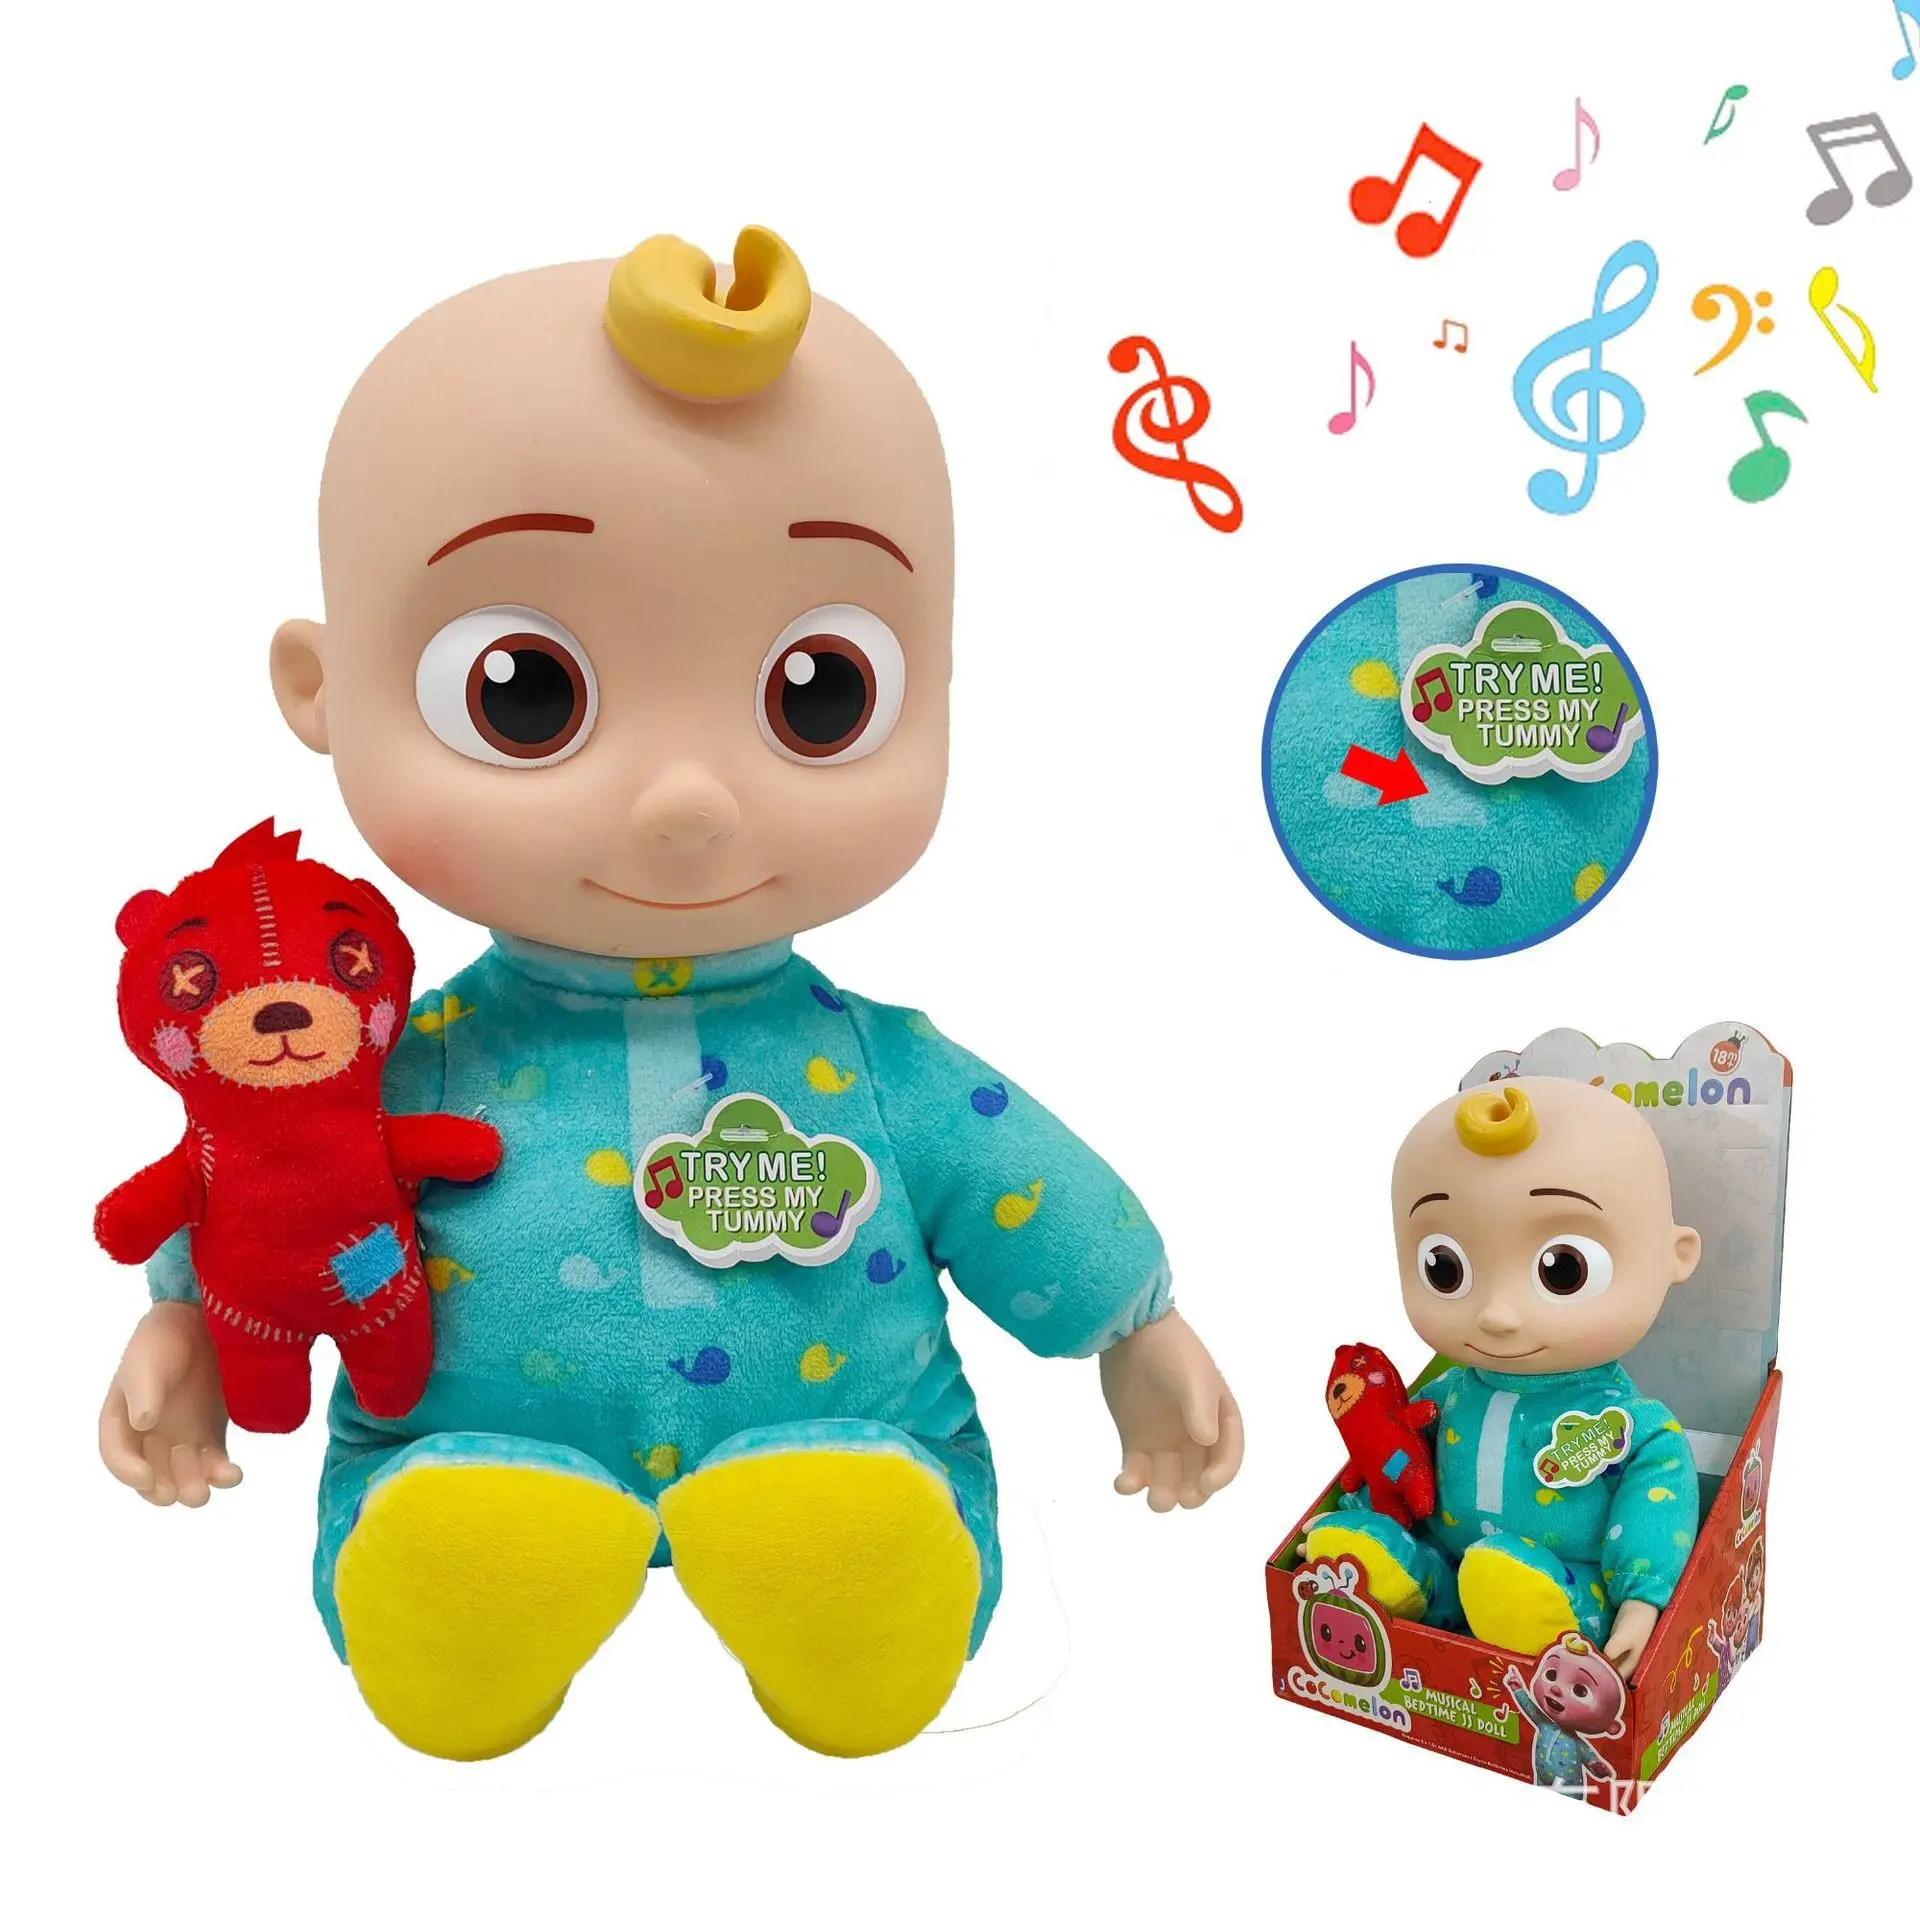 Soft Music Toy Bedtime JJ Doll Plush Body Musical Bedtime Doll Toys for Babies